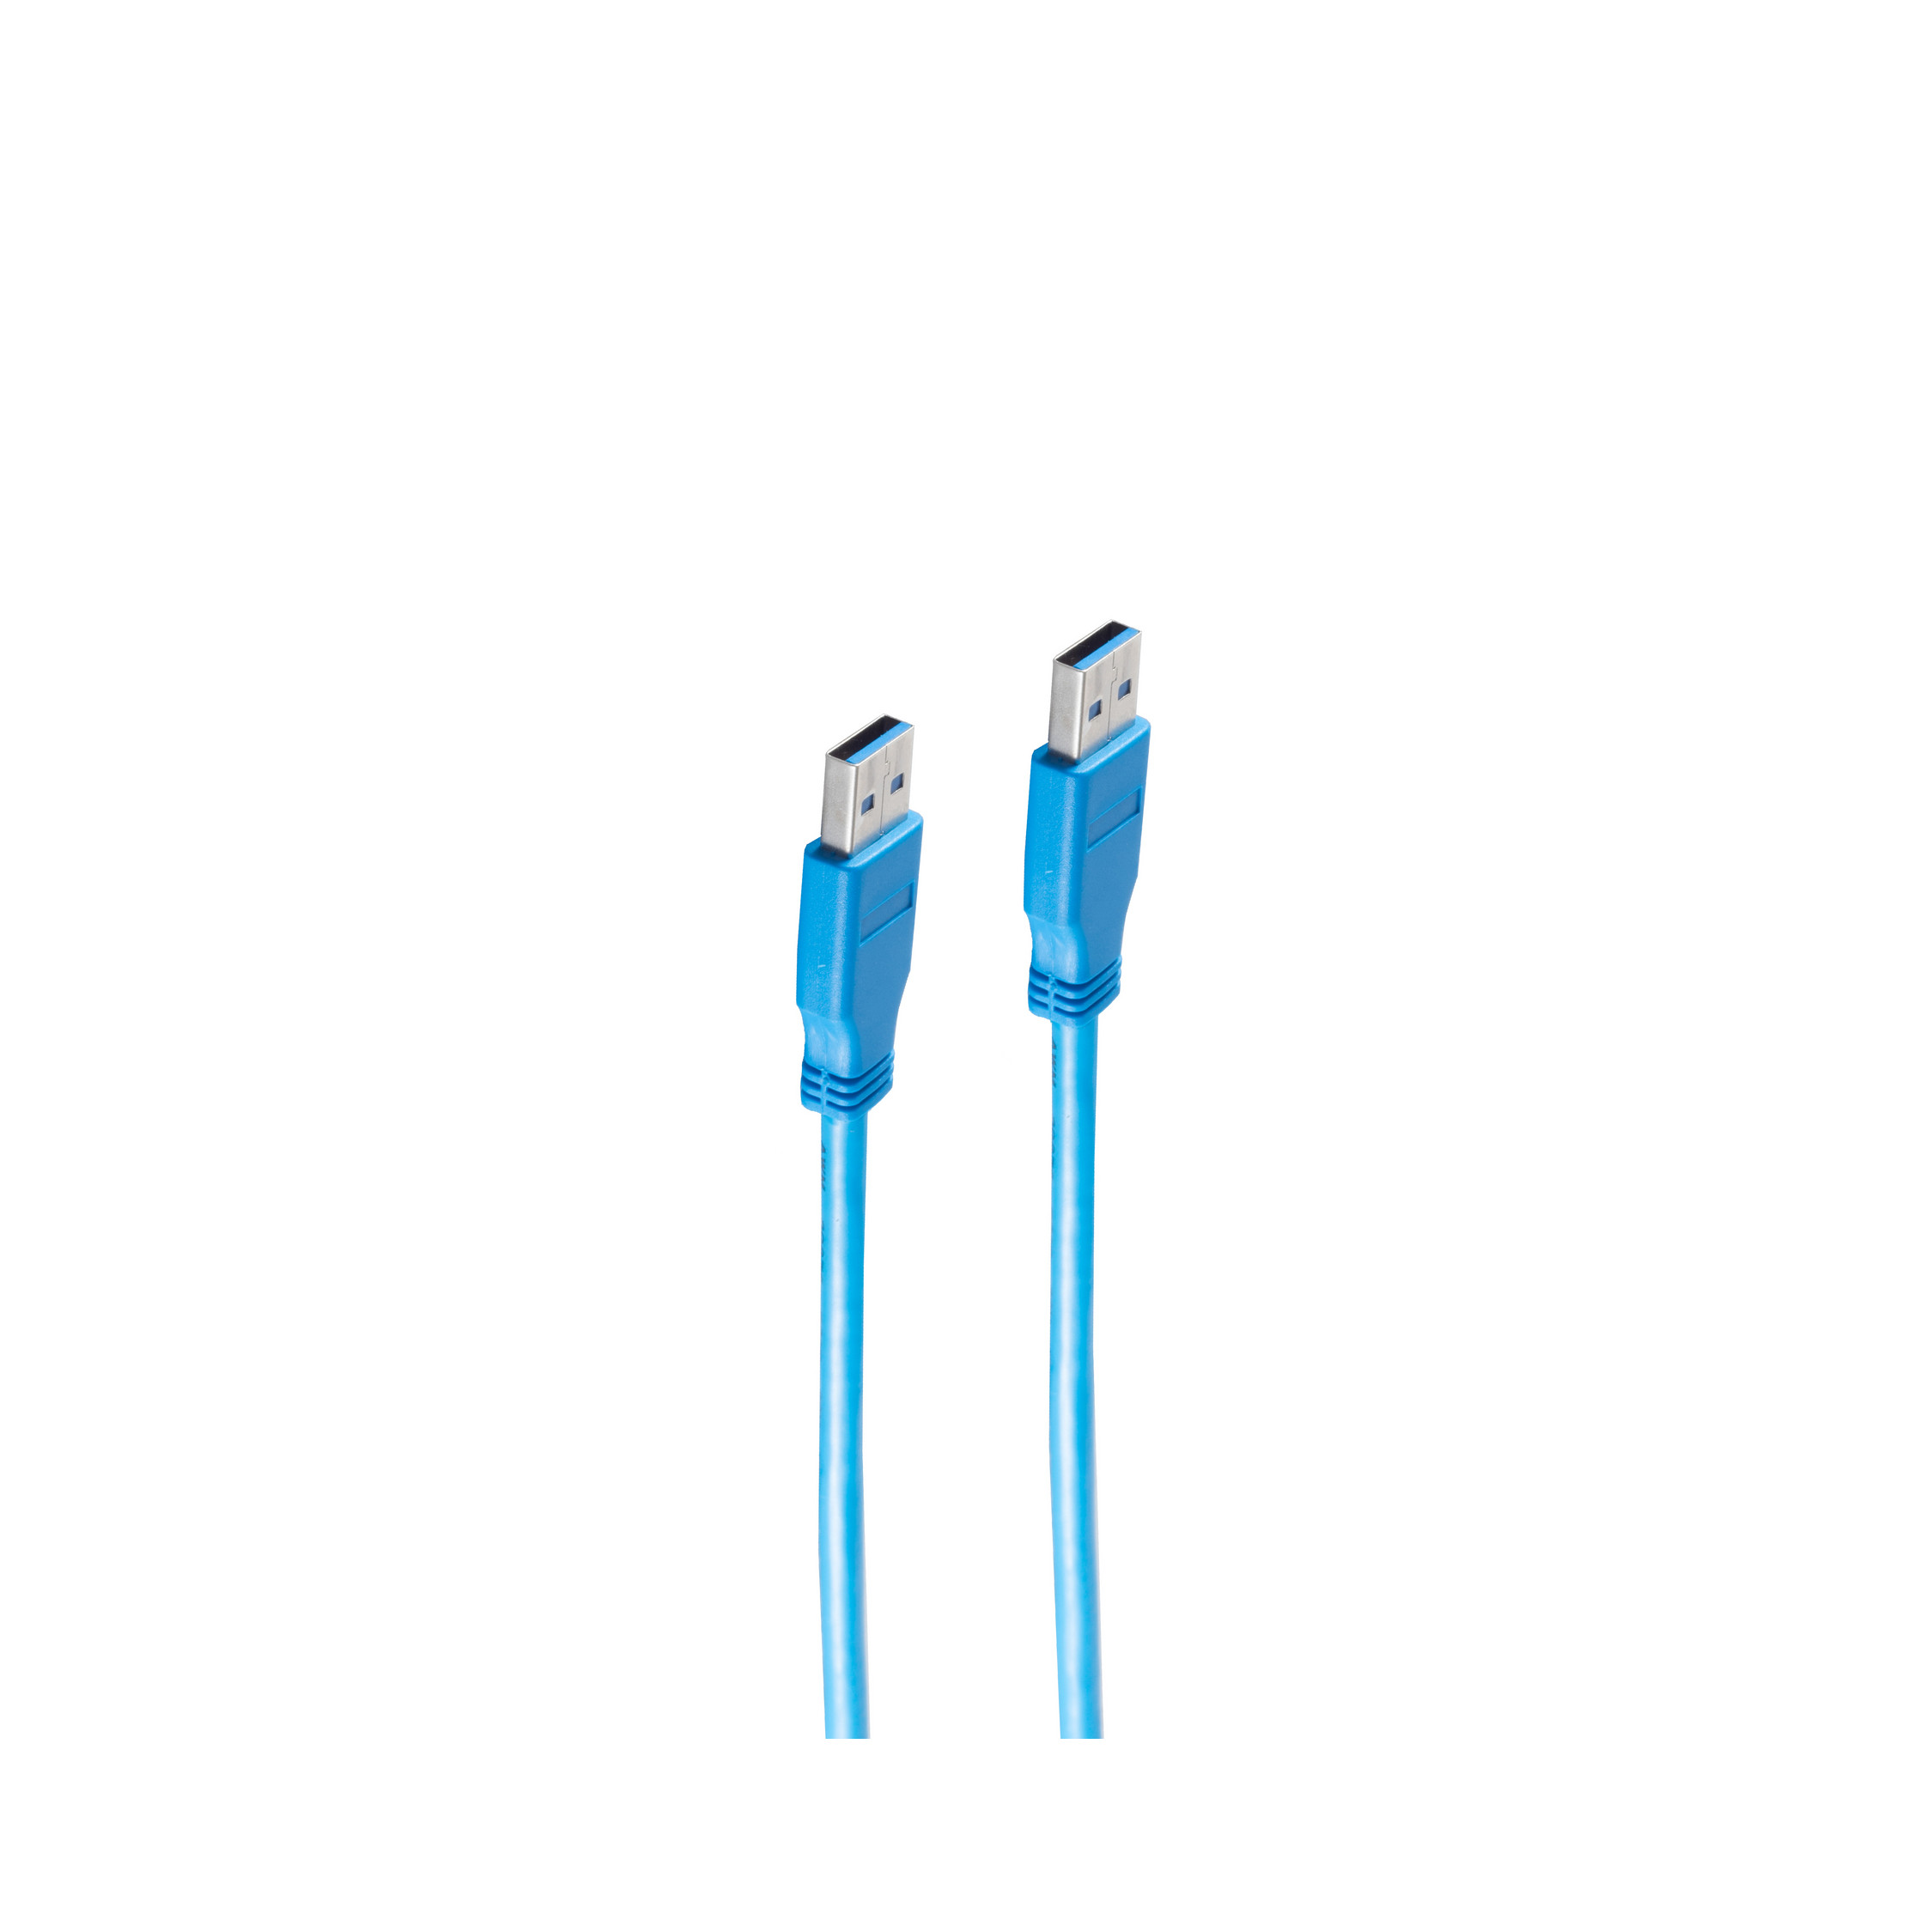 A Stecker blau USB SHIVERPEAKS / 1,8m Stecker USB Kabel A USB 3.0 Kabel